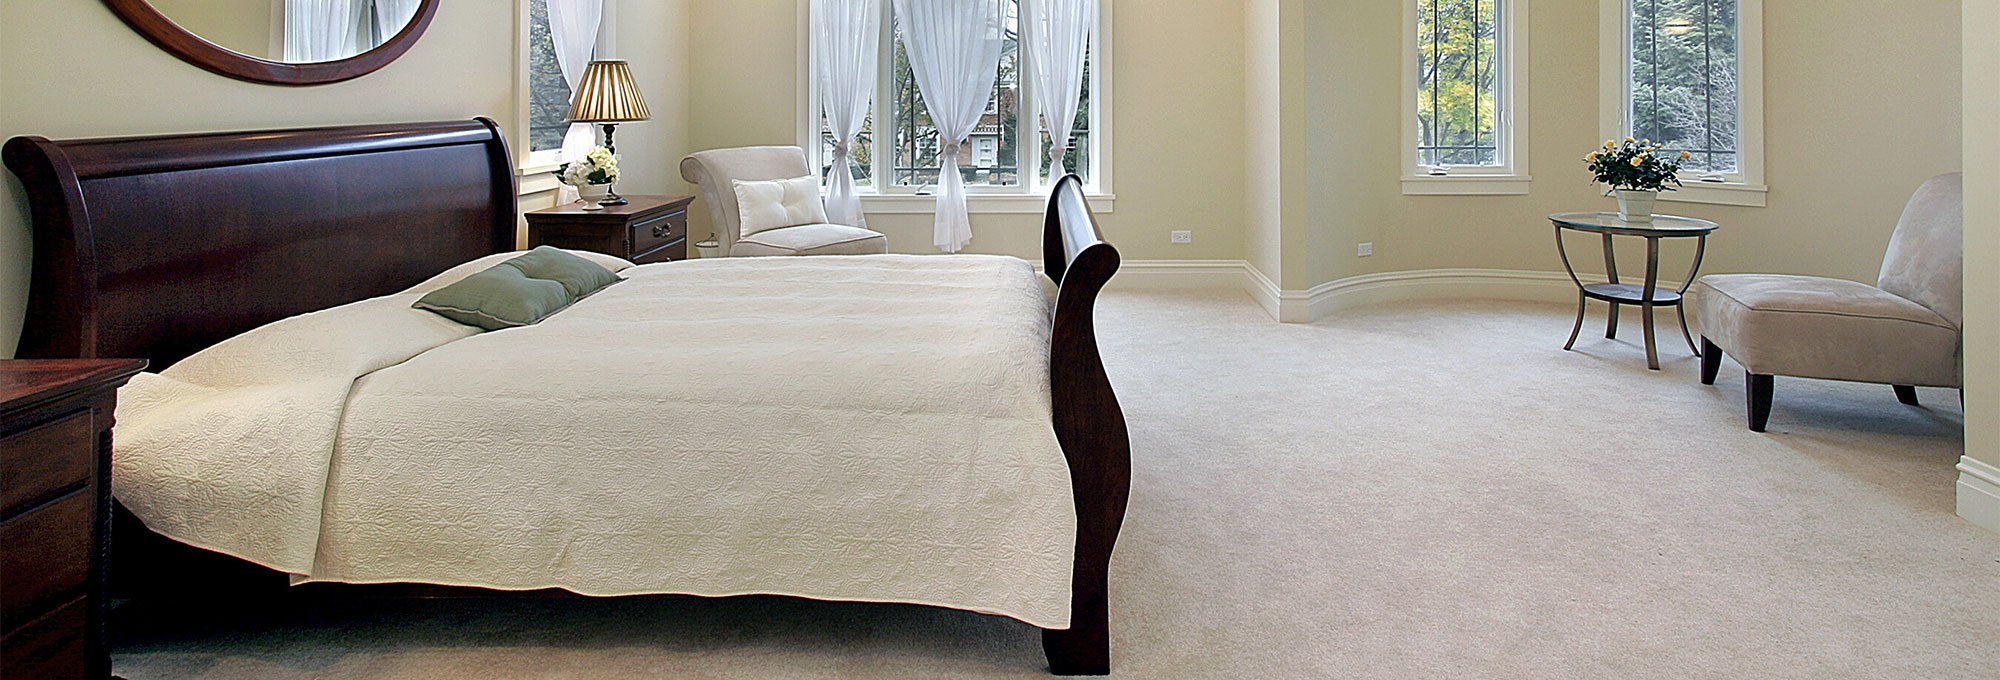 Bedroom Carpeting Ideas